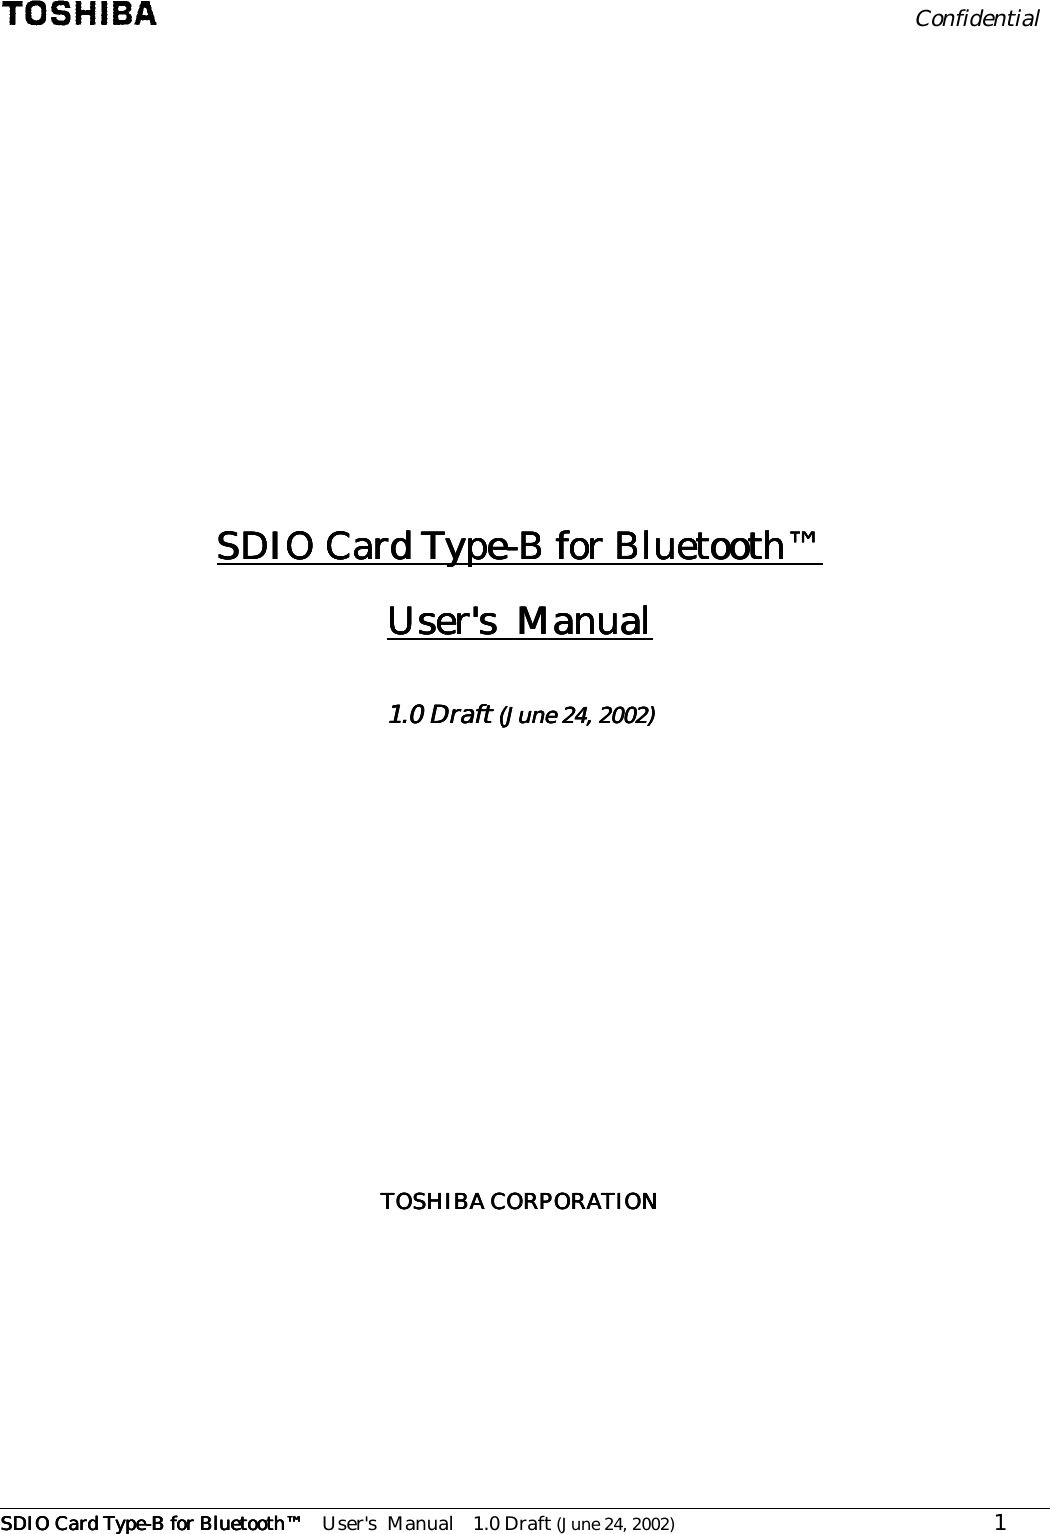                                                         Confidential      SDIO Card TypeSDIO Card TypeSDIO Card TypeSDIO Card Type----B for BluetoothB for BluetoothB for BluetoothB for Bluetooth™™™™ User&apos;s  Manual 1.0 Draft (June 24, 2002)                   1              SDIO Card TypeSDIO Card TypeSDIO Card TypeSDIO Card Type----B for BluetoothB for BluetoothB for BluetoothB for Bluetooth™™™™    User&apos;s  ManualUser&apos;s  ManualUser&apos;s  ManualUser&apos;s  Manual        1.01.01.01.0    DraftDraftDraftDraft (June 24, 2002) (June 24, 2002) (June 24, 2002) (June 24, 2002)                   TOSHIBA CORPORATIONTOSHIBA CORPORATIONTOSHIBA CORPORATIONTOSHIBA CORPORATION